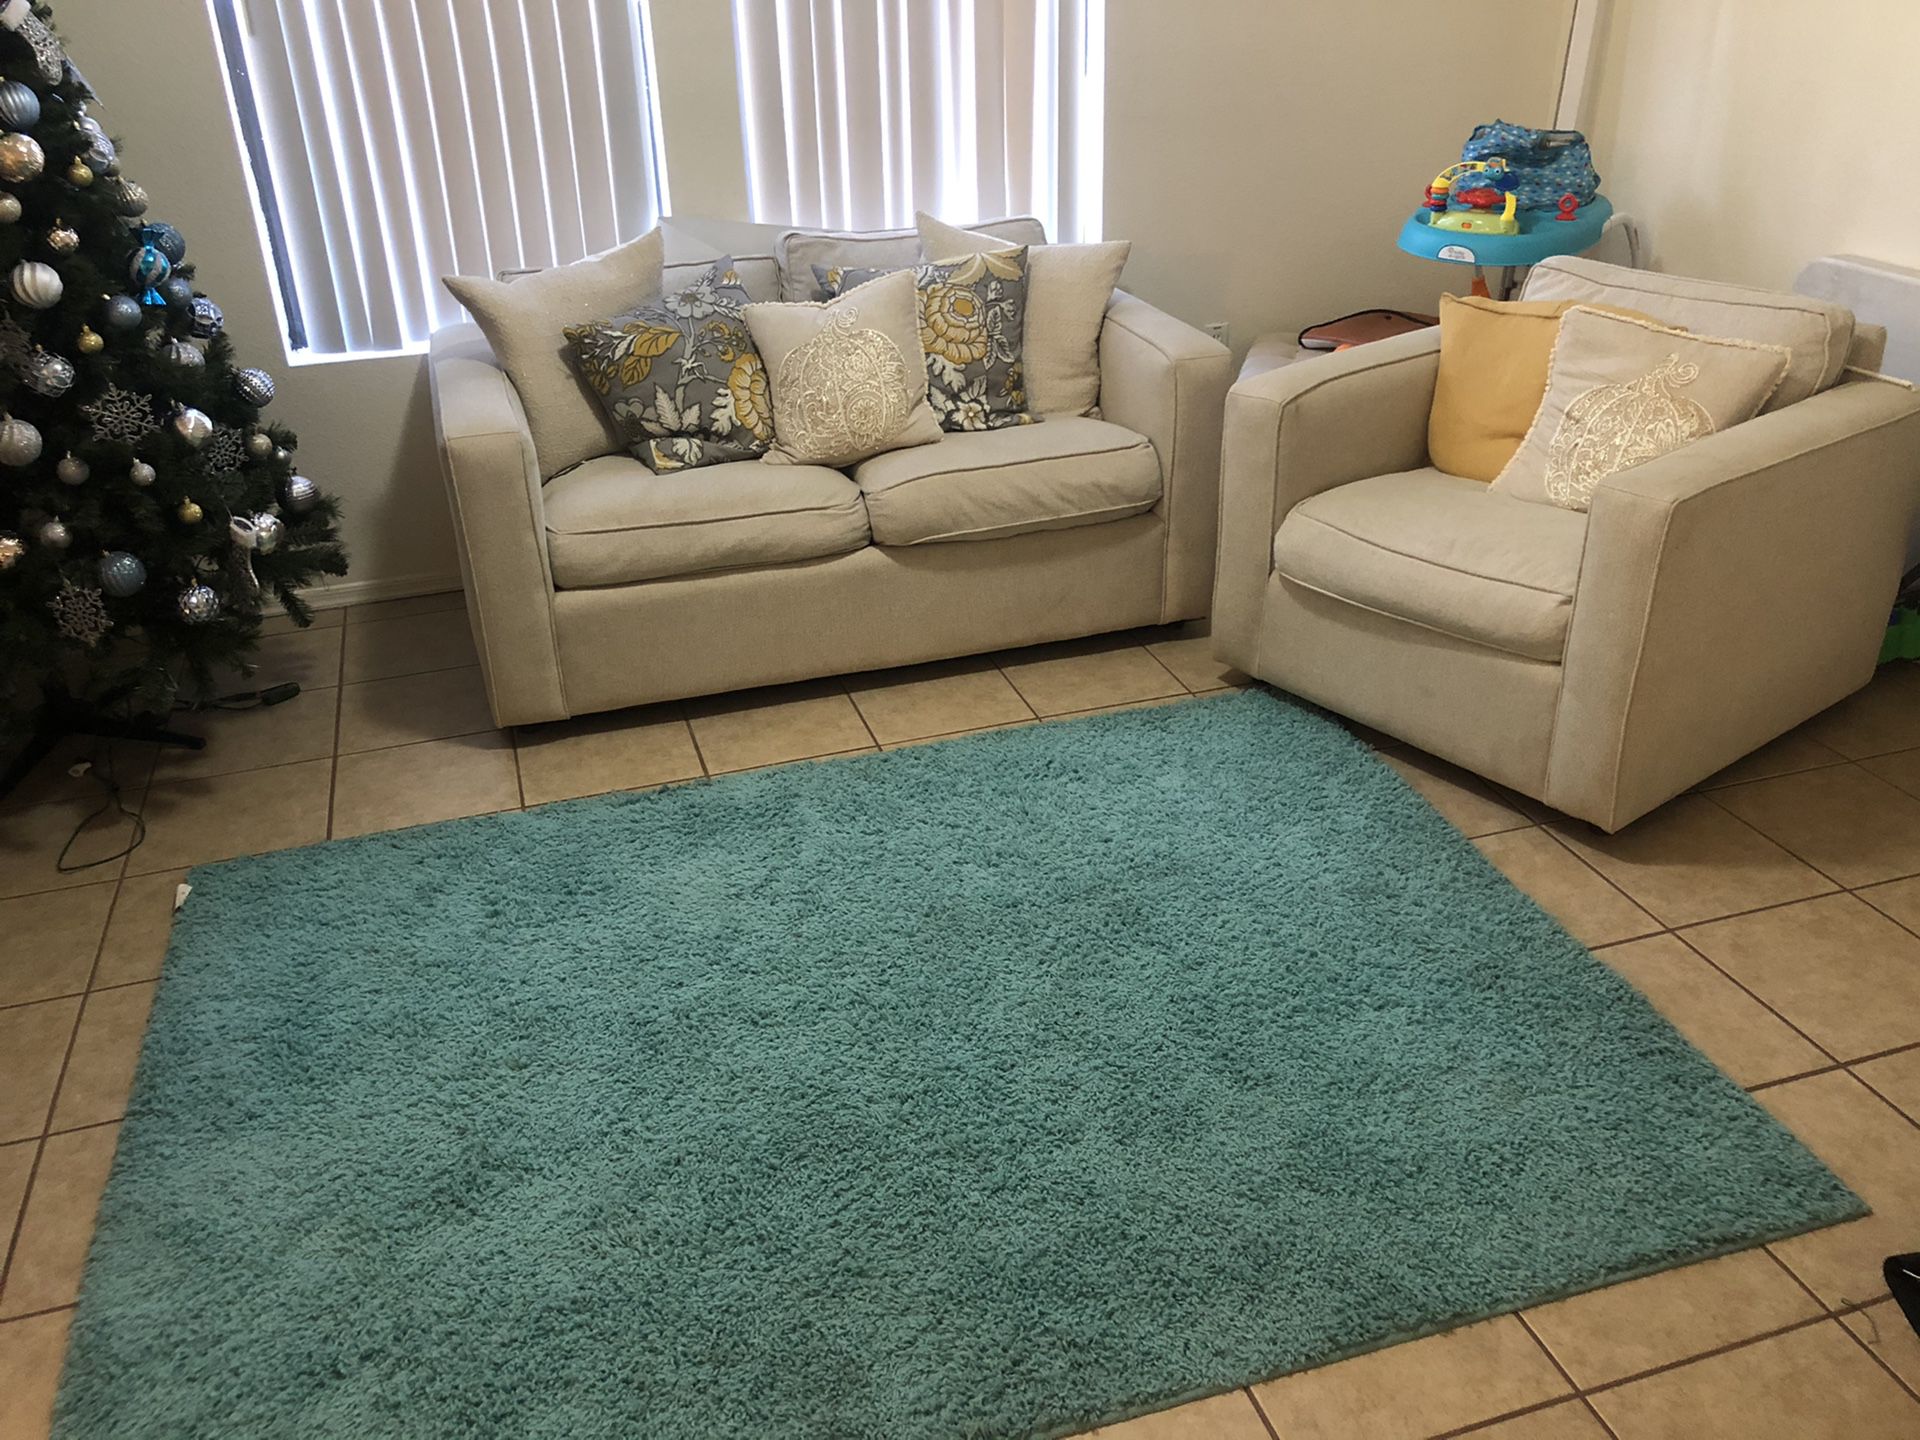 Cute living room set